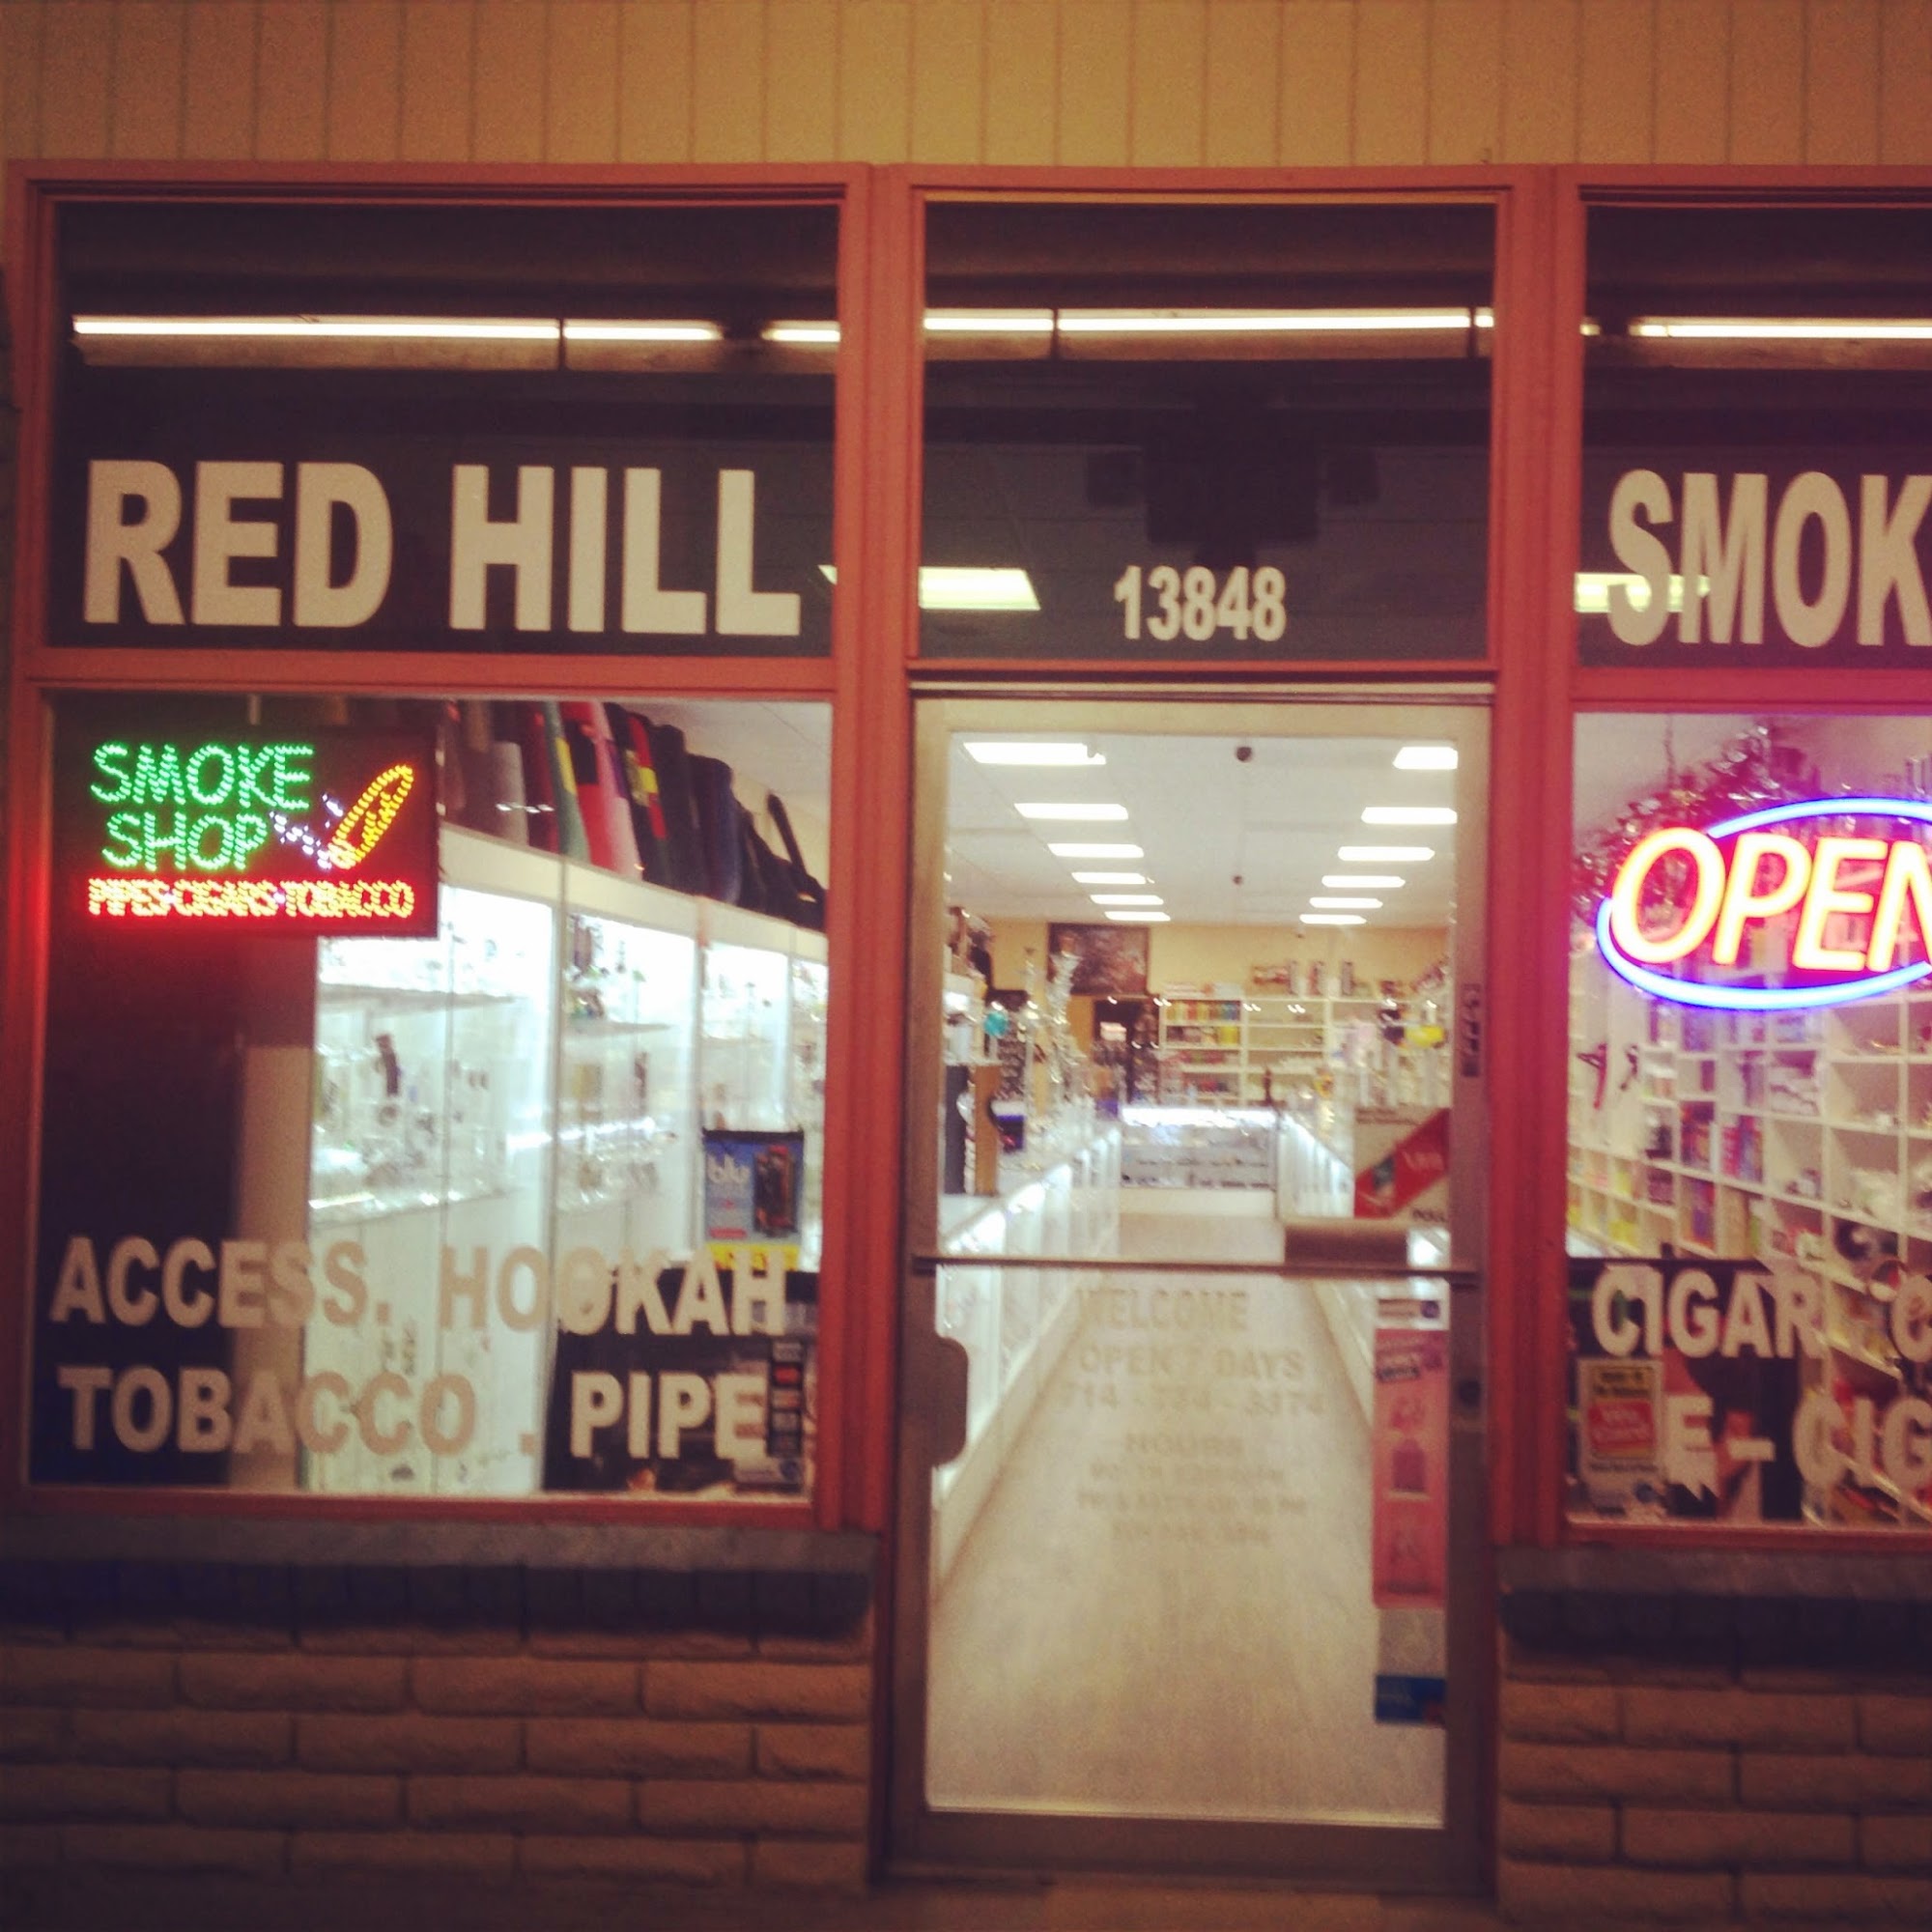 Red Hill Smoke Shop / Vape & Cigar